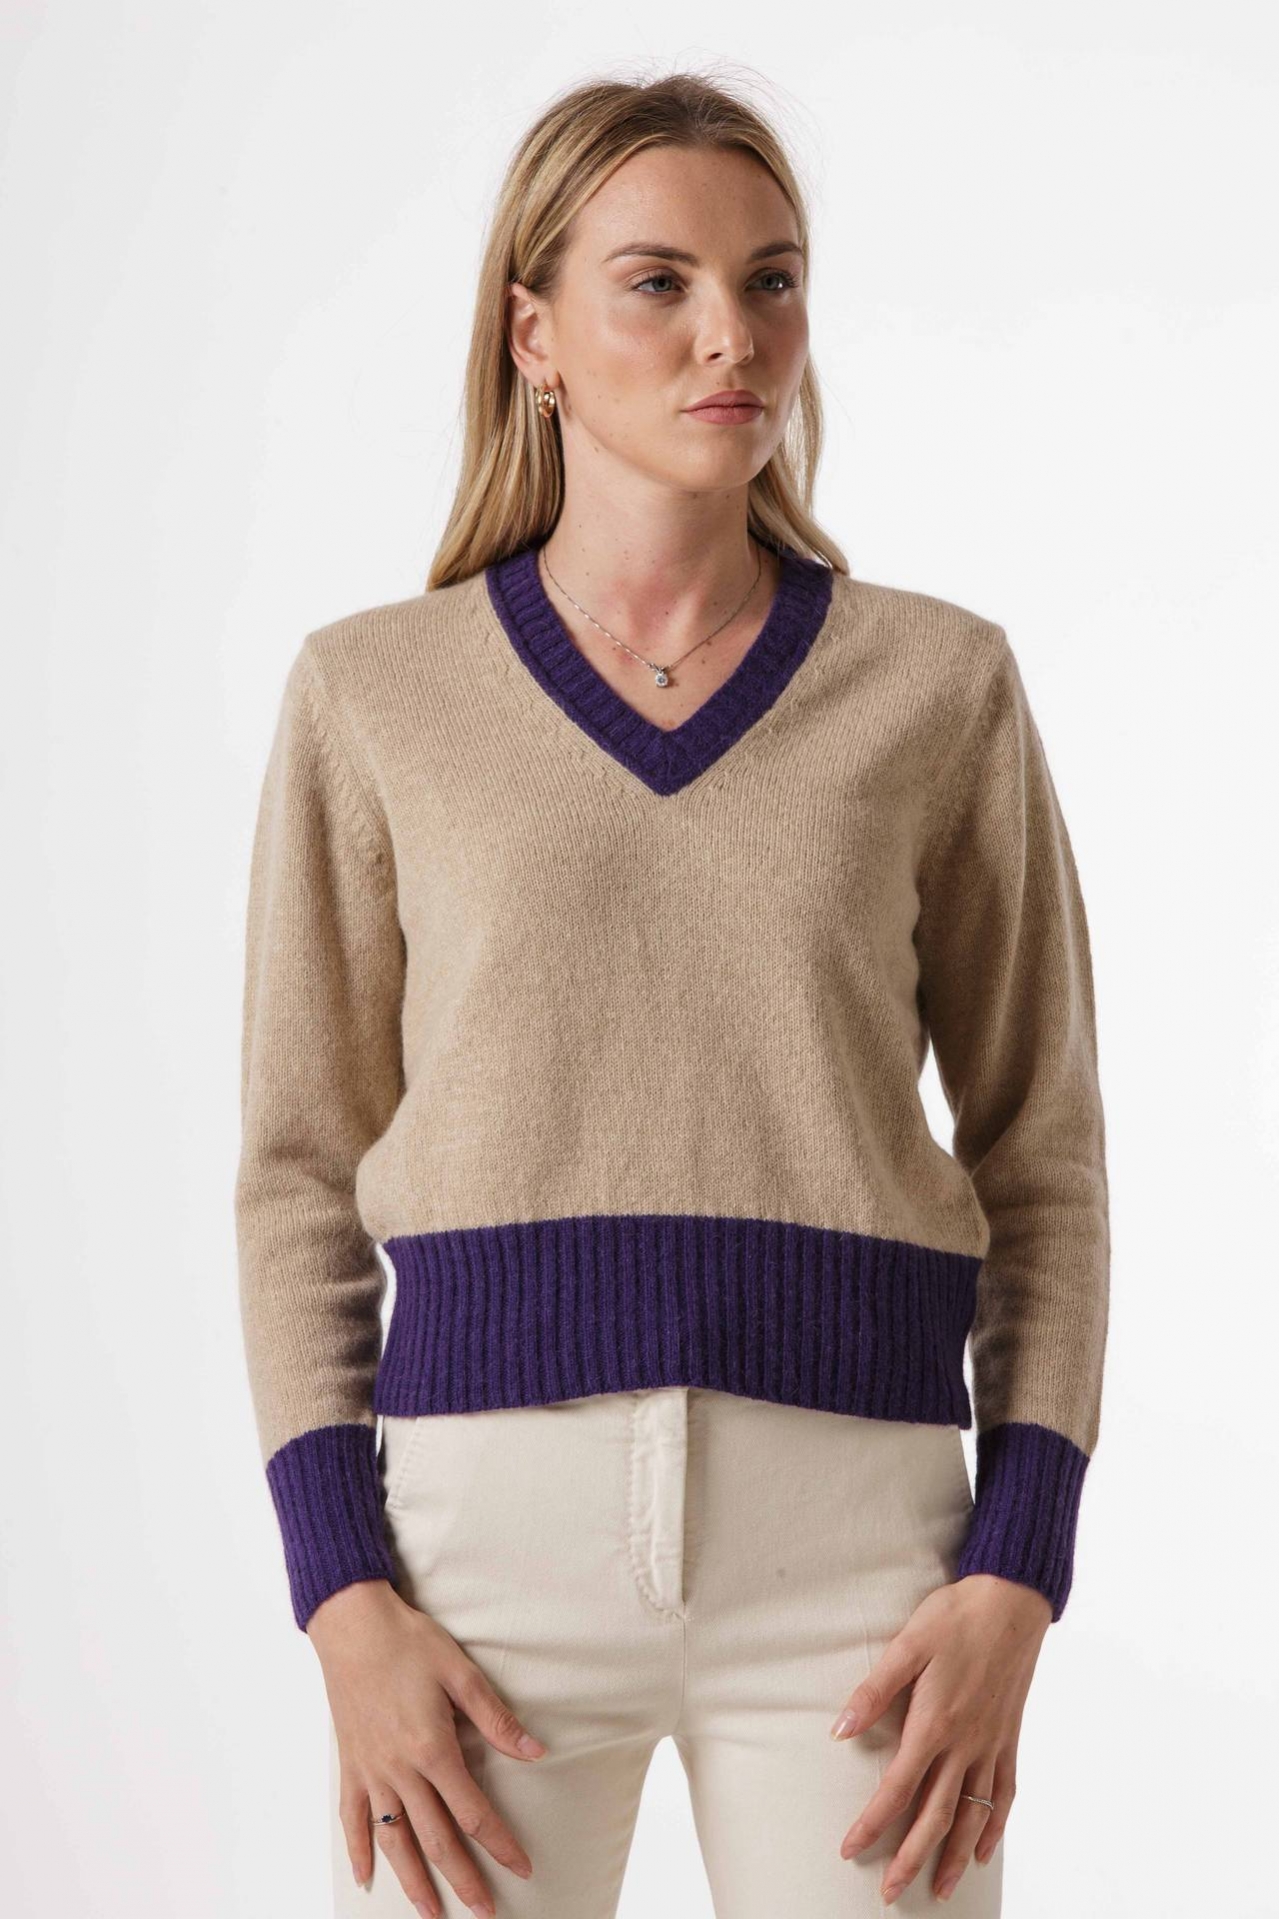 Two-tone sweater